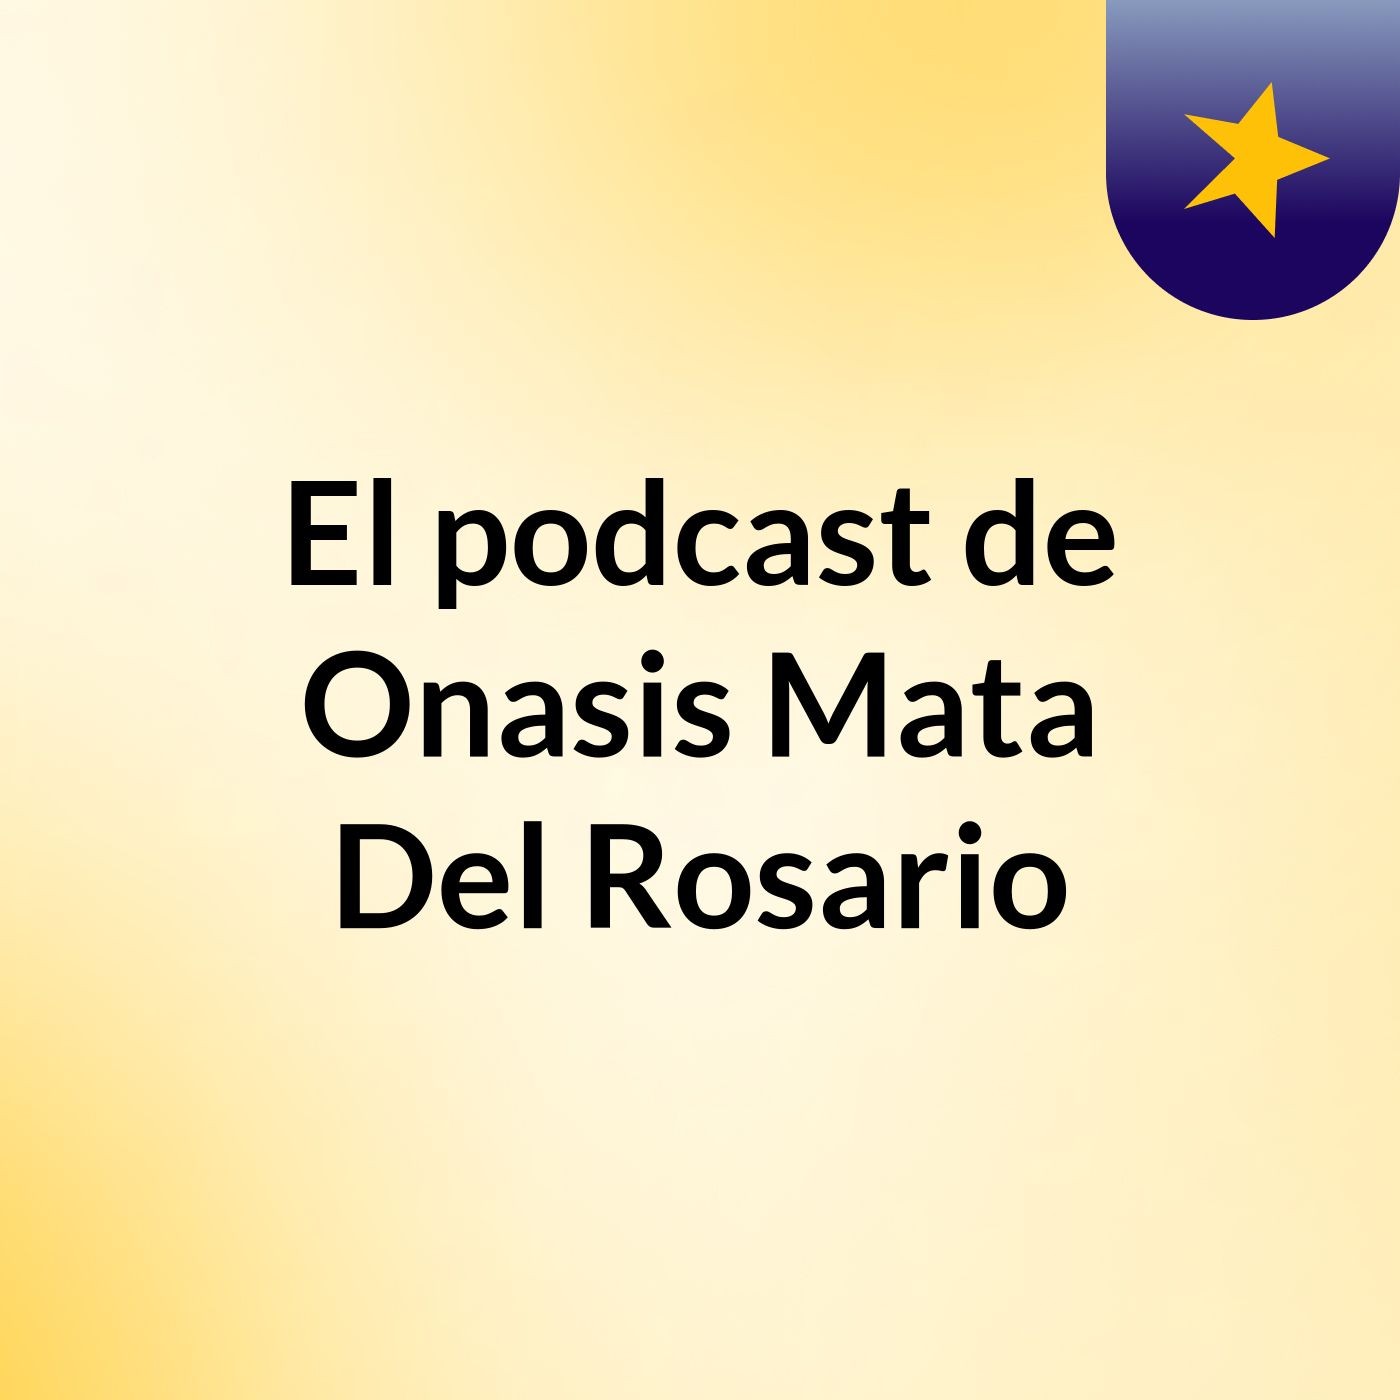 El podcast de Onasis Mata Del Rosario